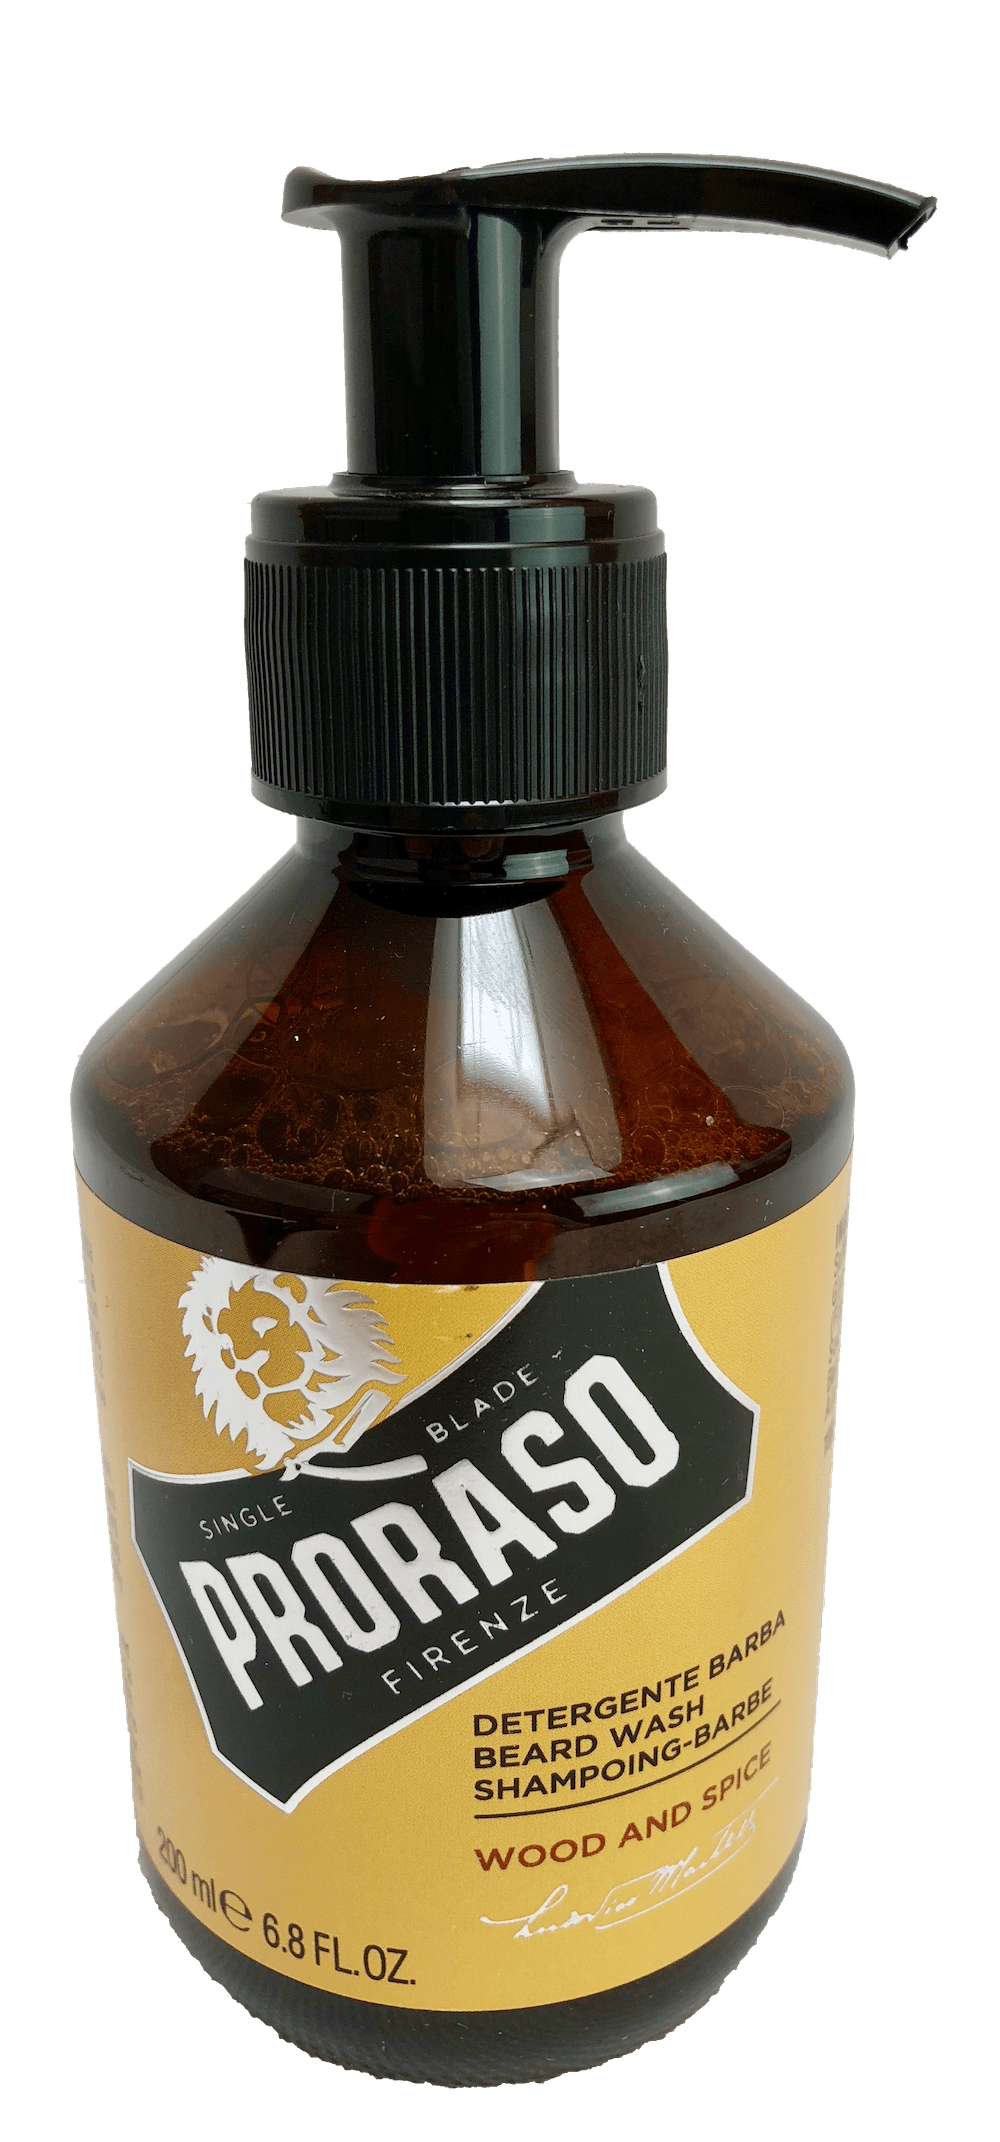 Bartshampoo (Wood & Spice)